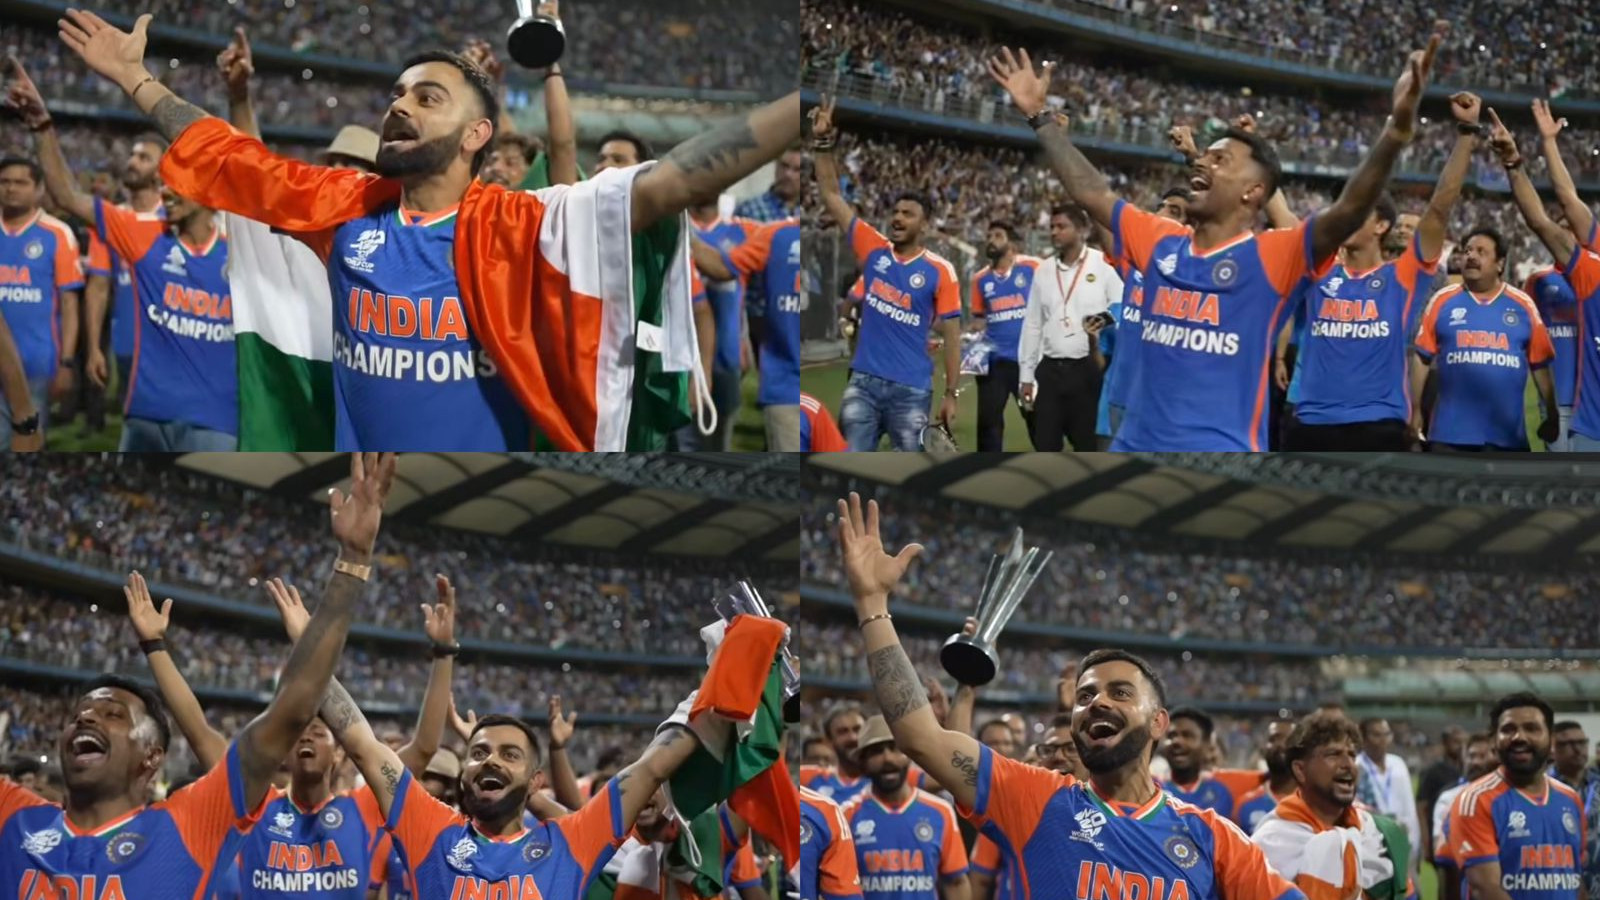 WATCH: Virat Kohli leads 'Vande Mataram' chants as Team India takes lap of honour at Wankhede